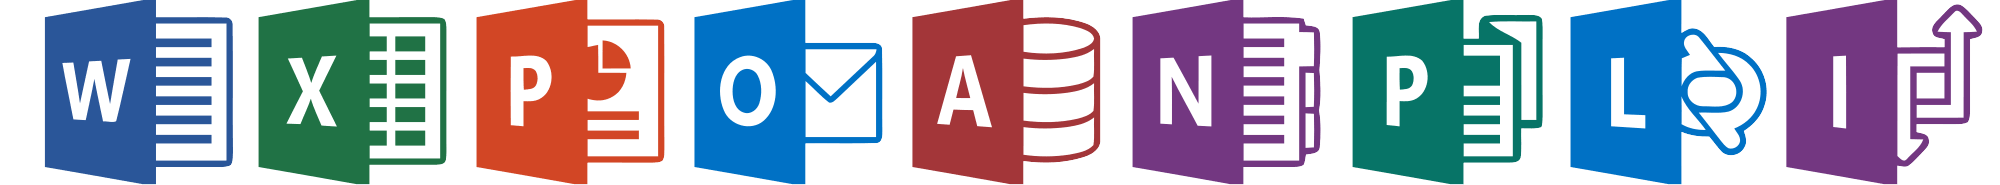 Microsoft Office 2013 Logo - File:Microsoft Office 2013 logos lineup.svg - Wikimedia Commons